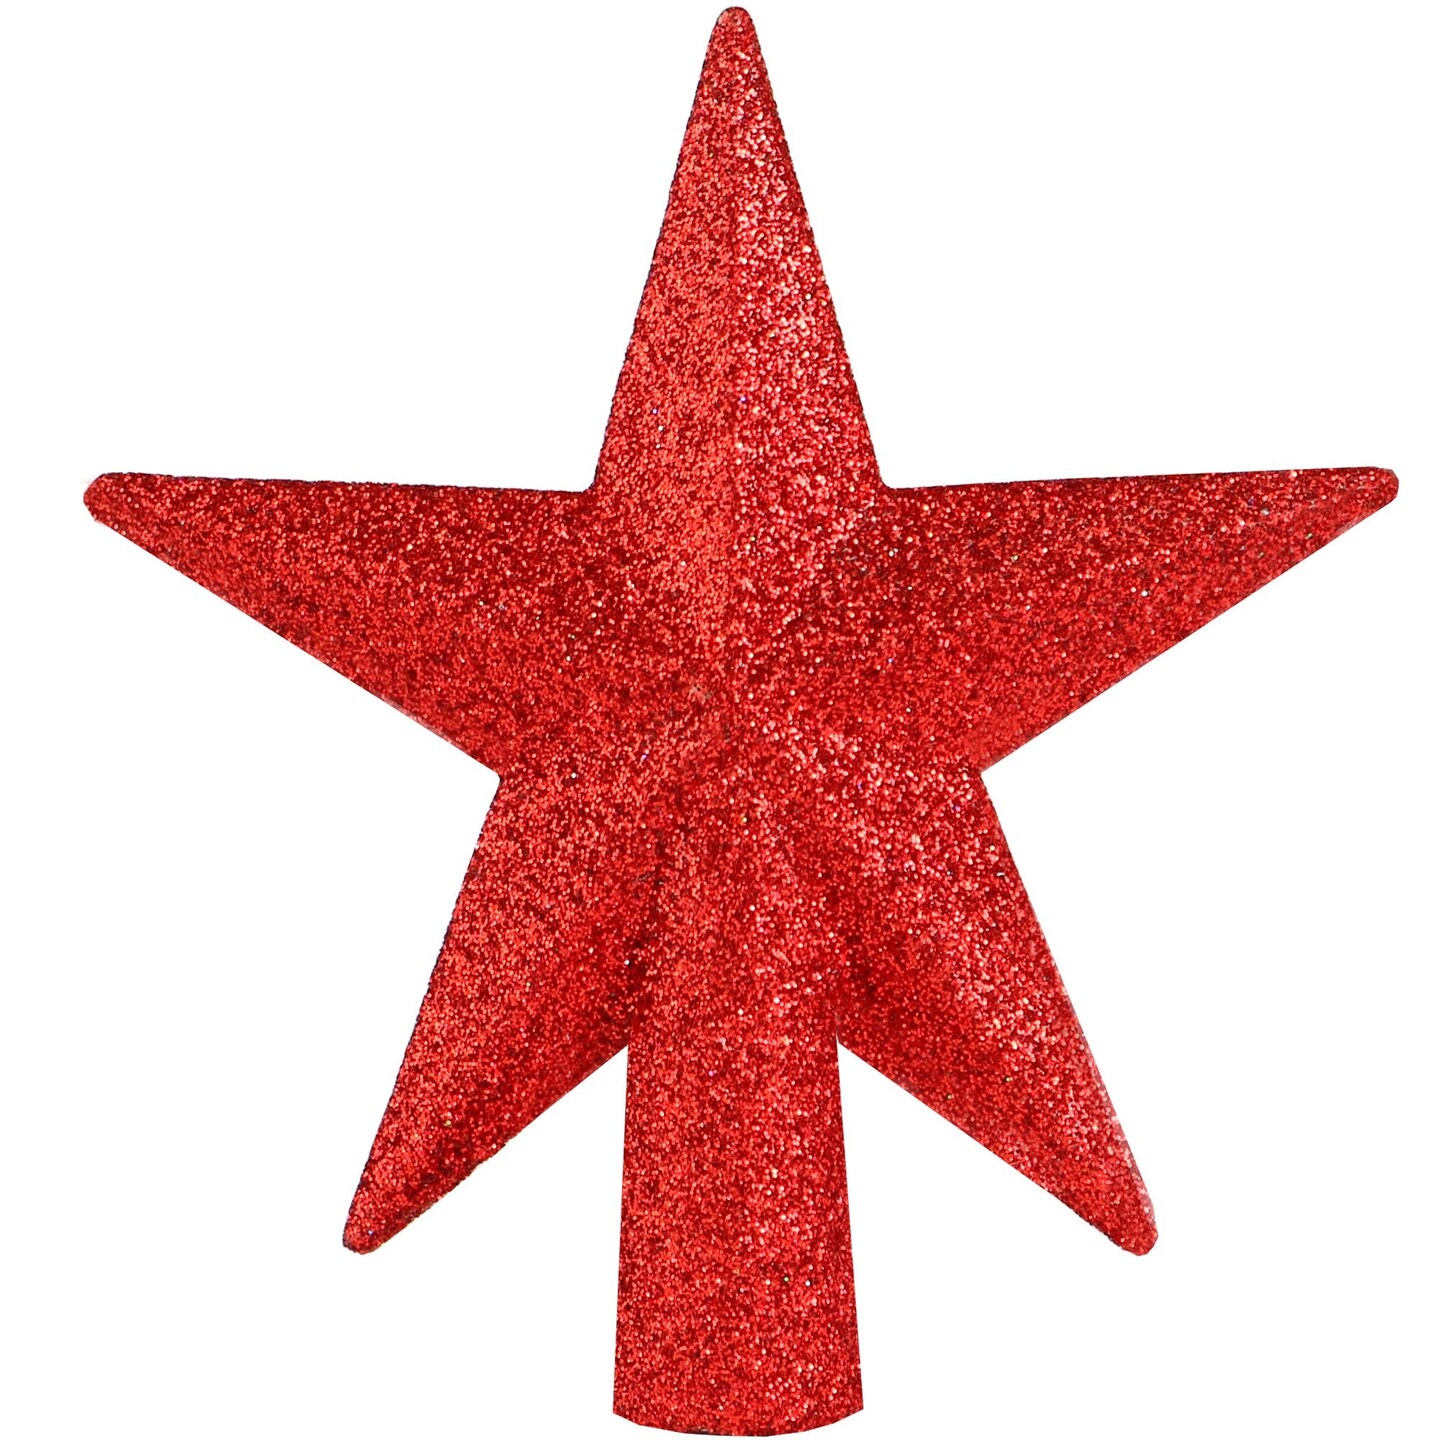 Ornativity Glitter Star Tree Topper - Christmas Red Decorative Holiday Bethlehem Star Ornament